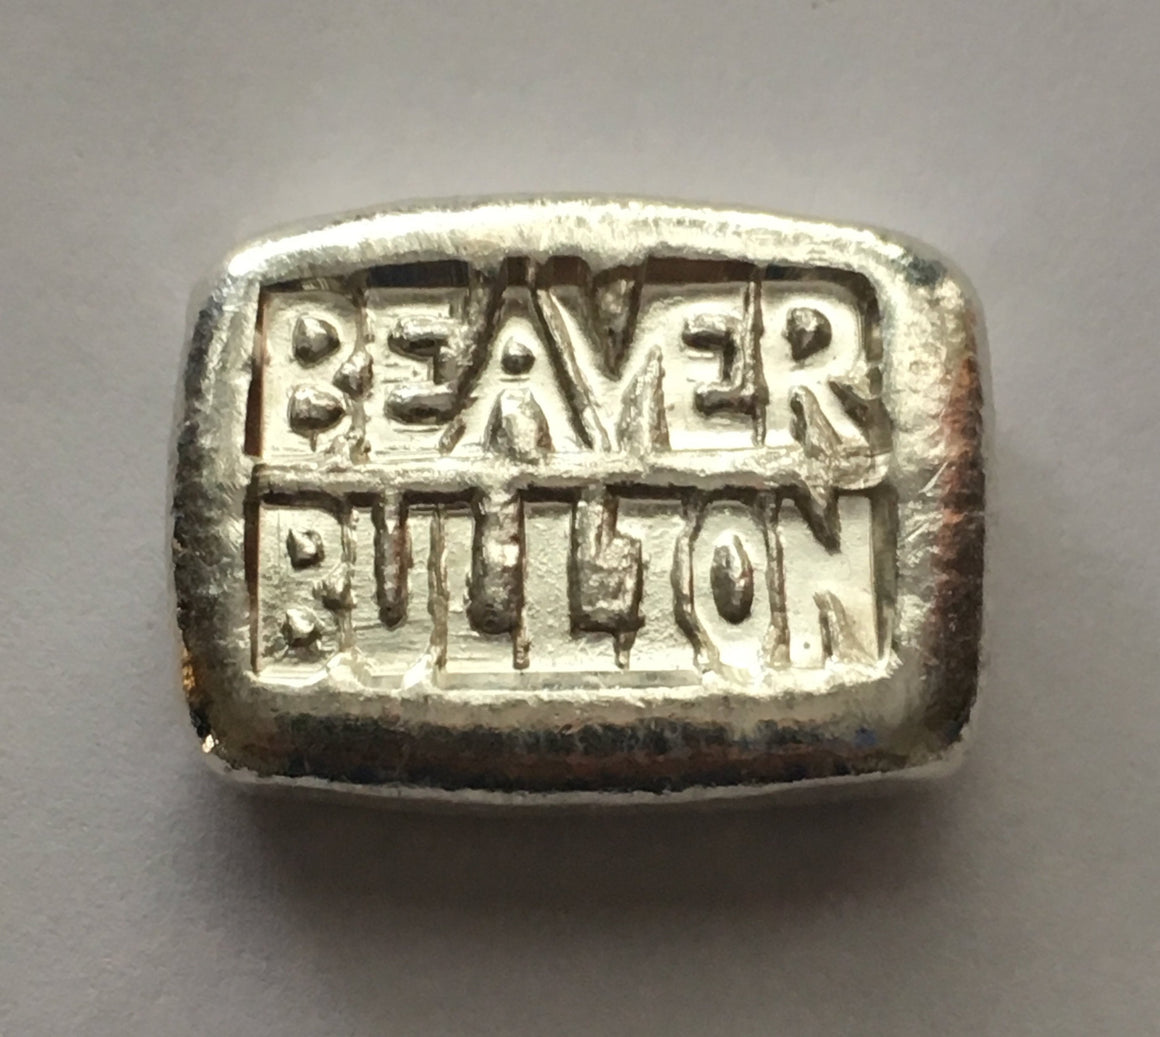 BEAVER BULLION, 1oz Hand Poured Silver Bar by Beaver Bullion